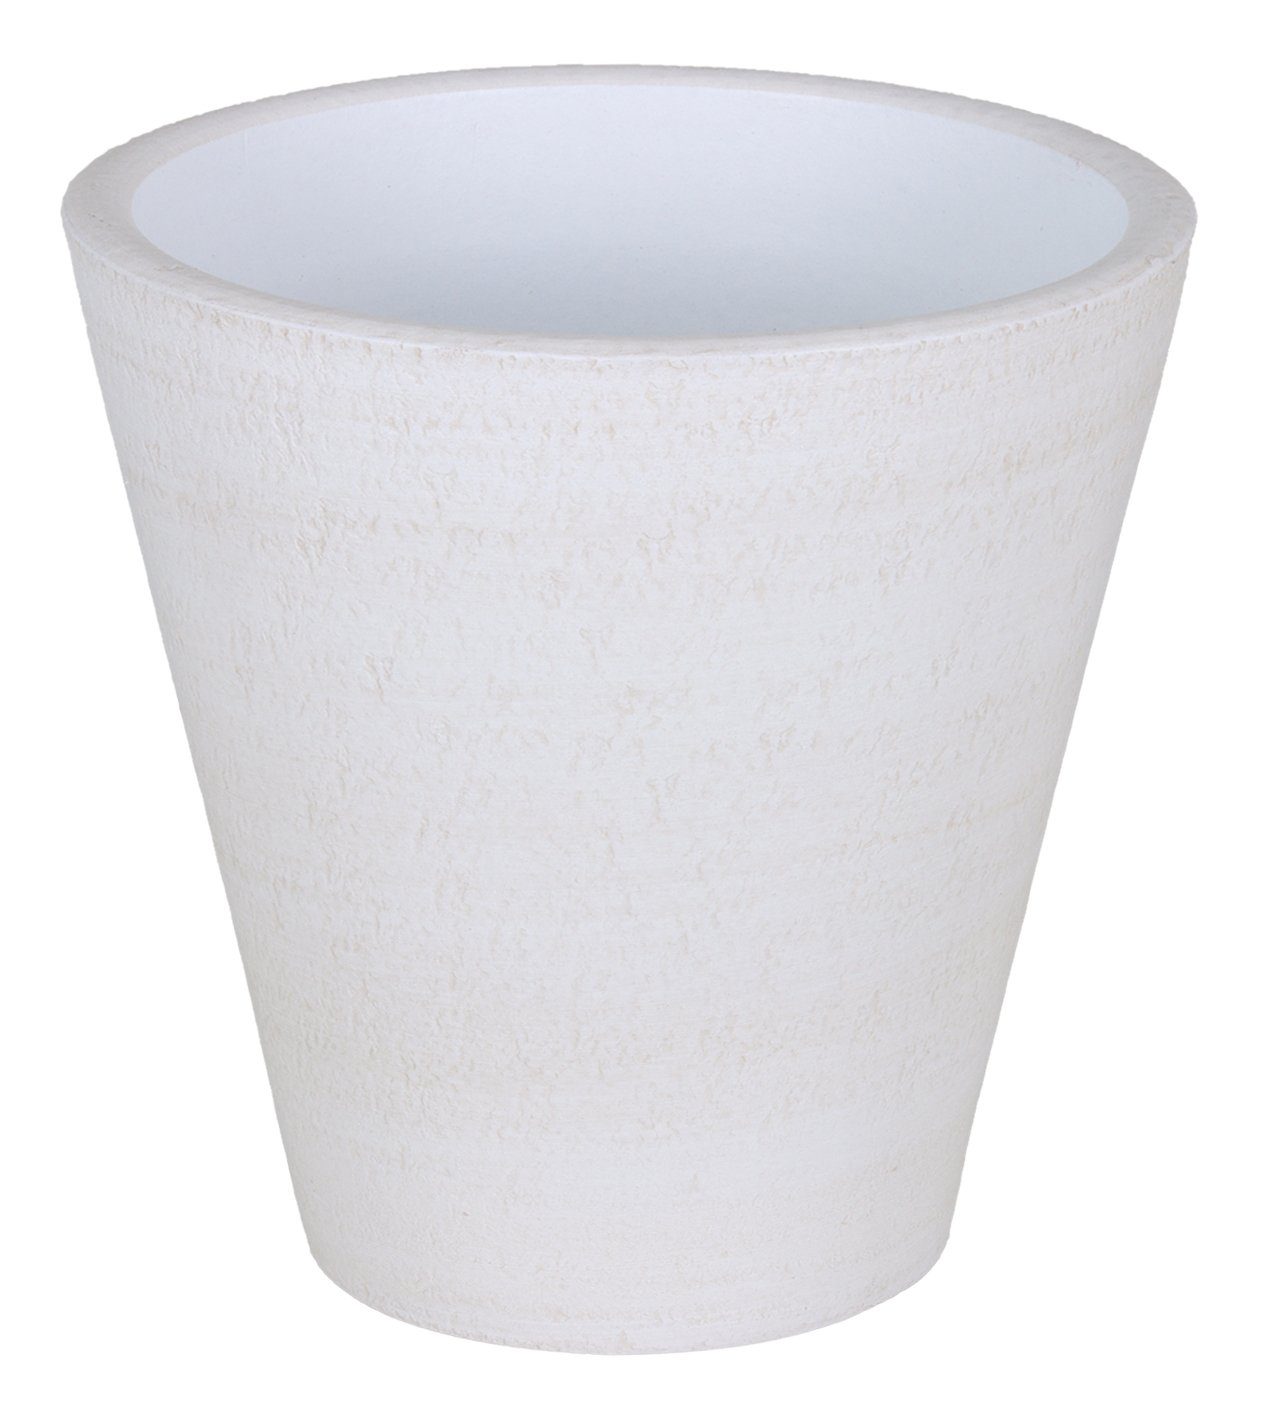 Creme tegawo konisch mit Übertopf Keramik-Vase handgemacht Strukturoptik, Lava-Conica,